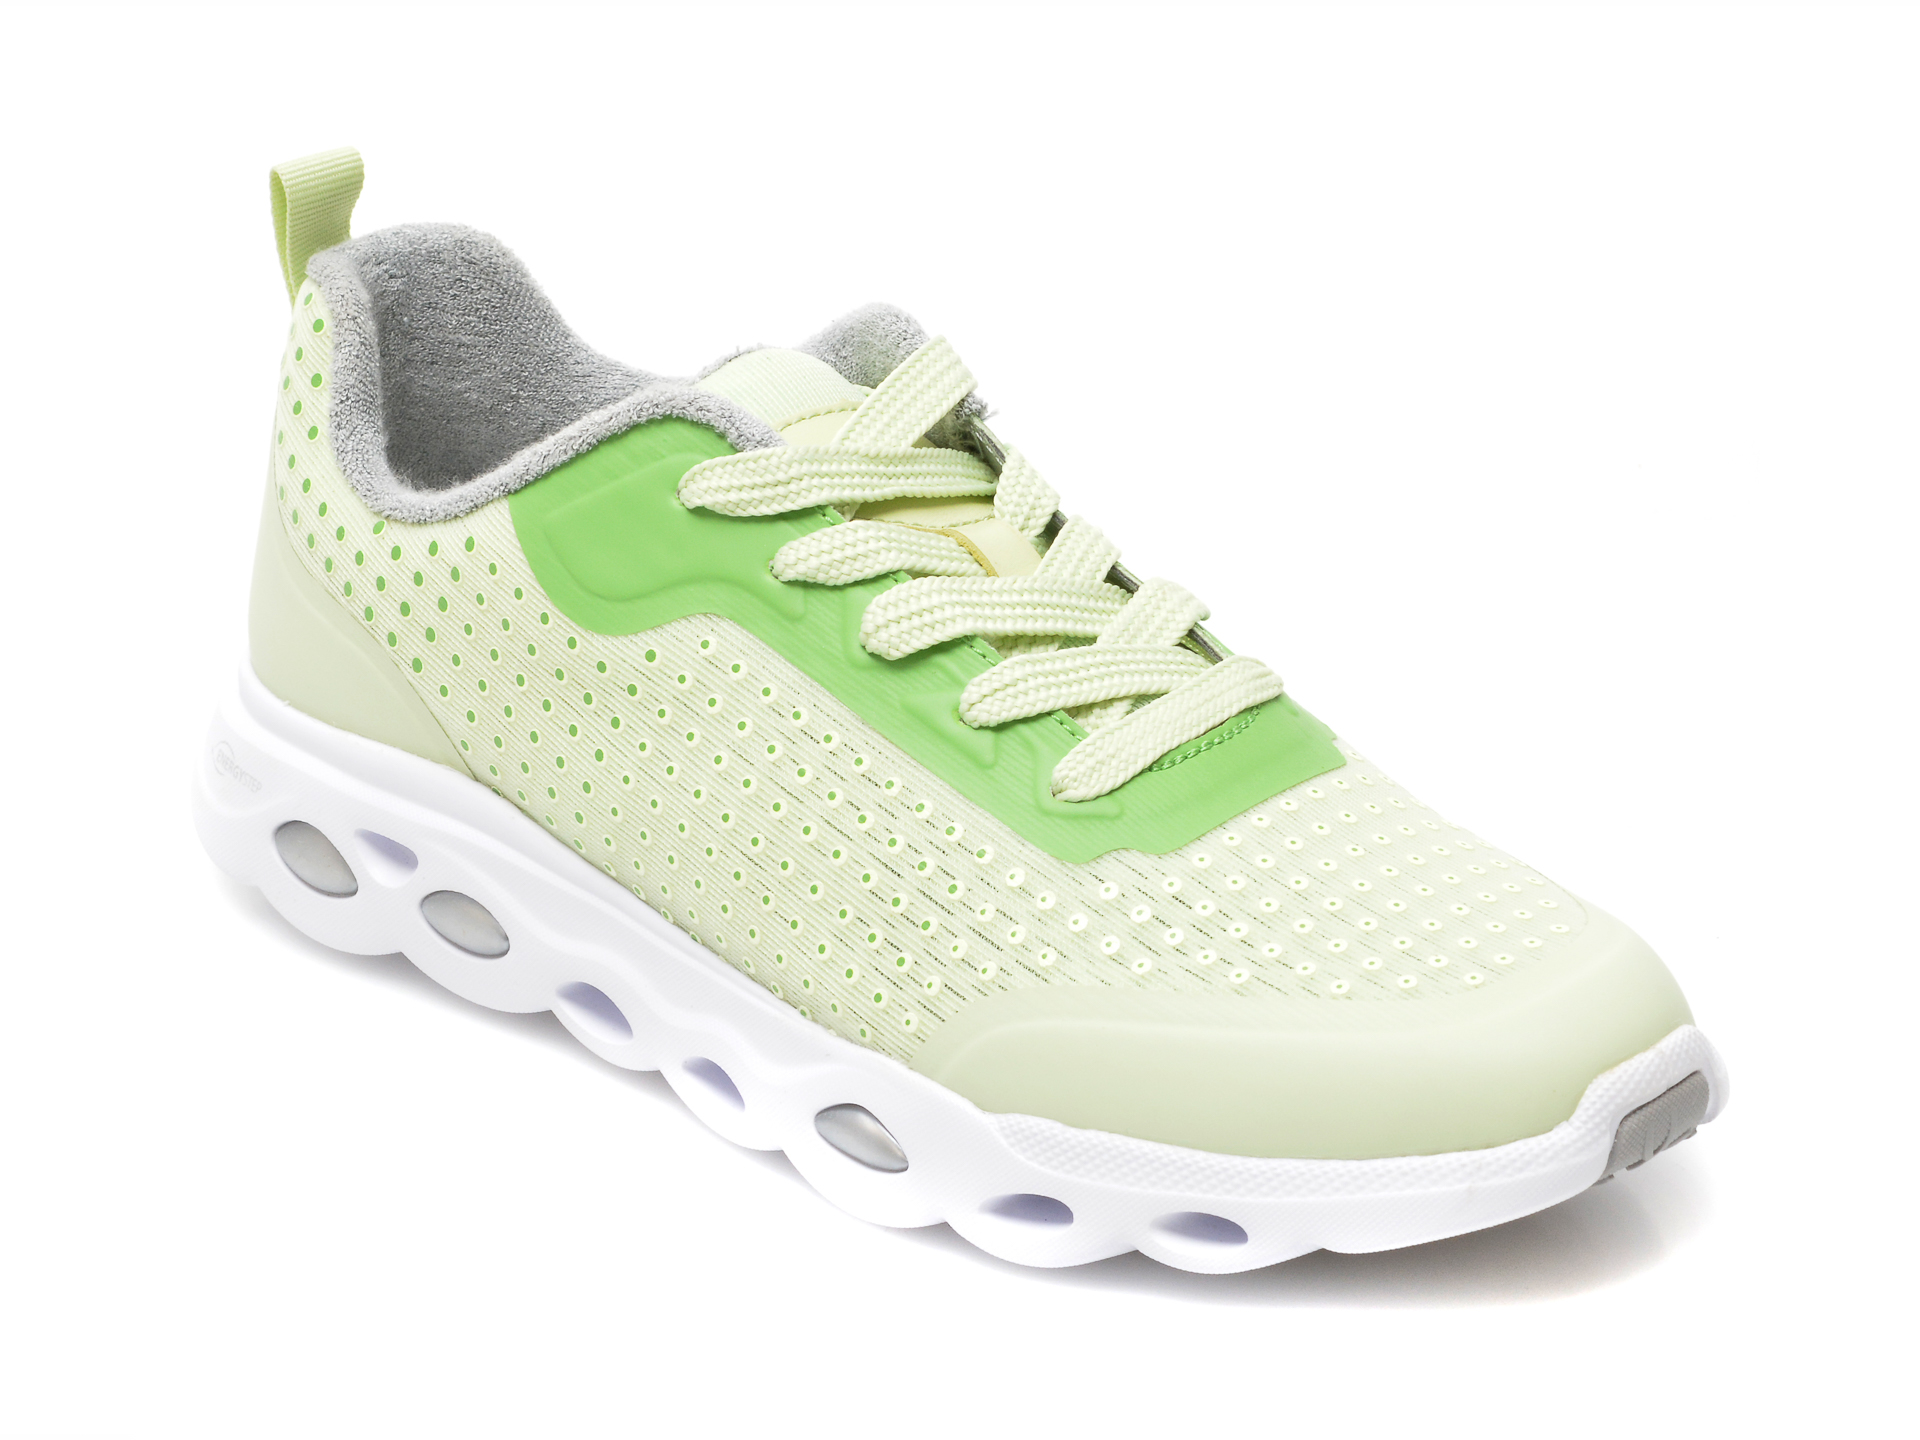 Pantofi sport ENERGYSTEP verzi, 12110, din material textil si piele ecologica